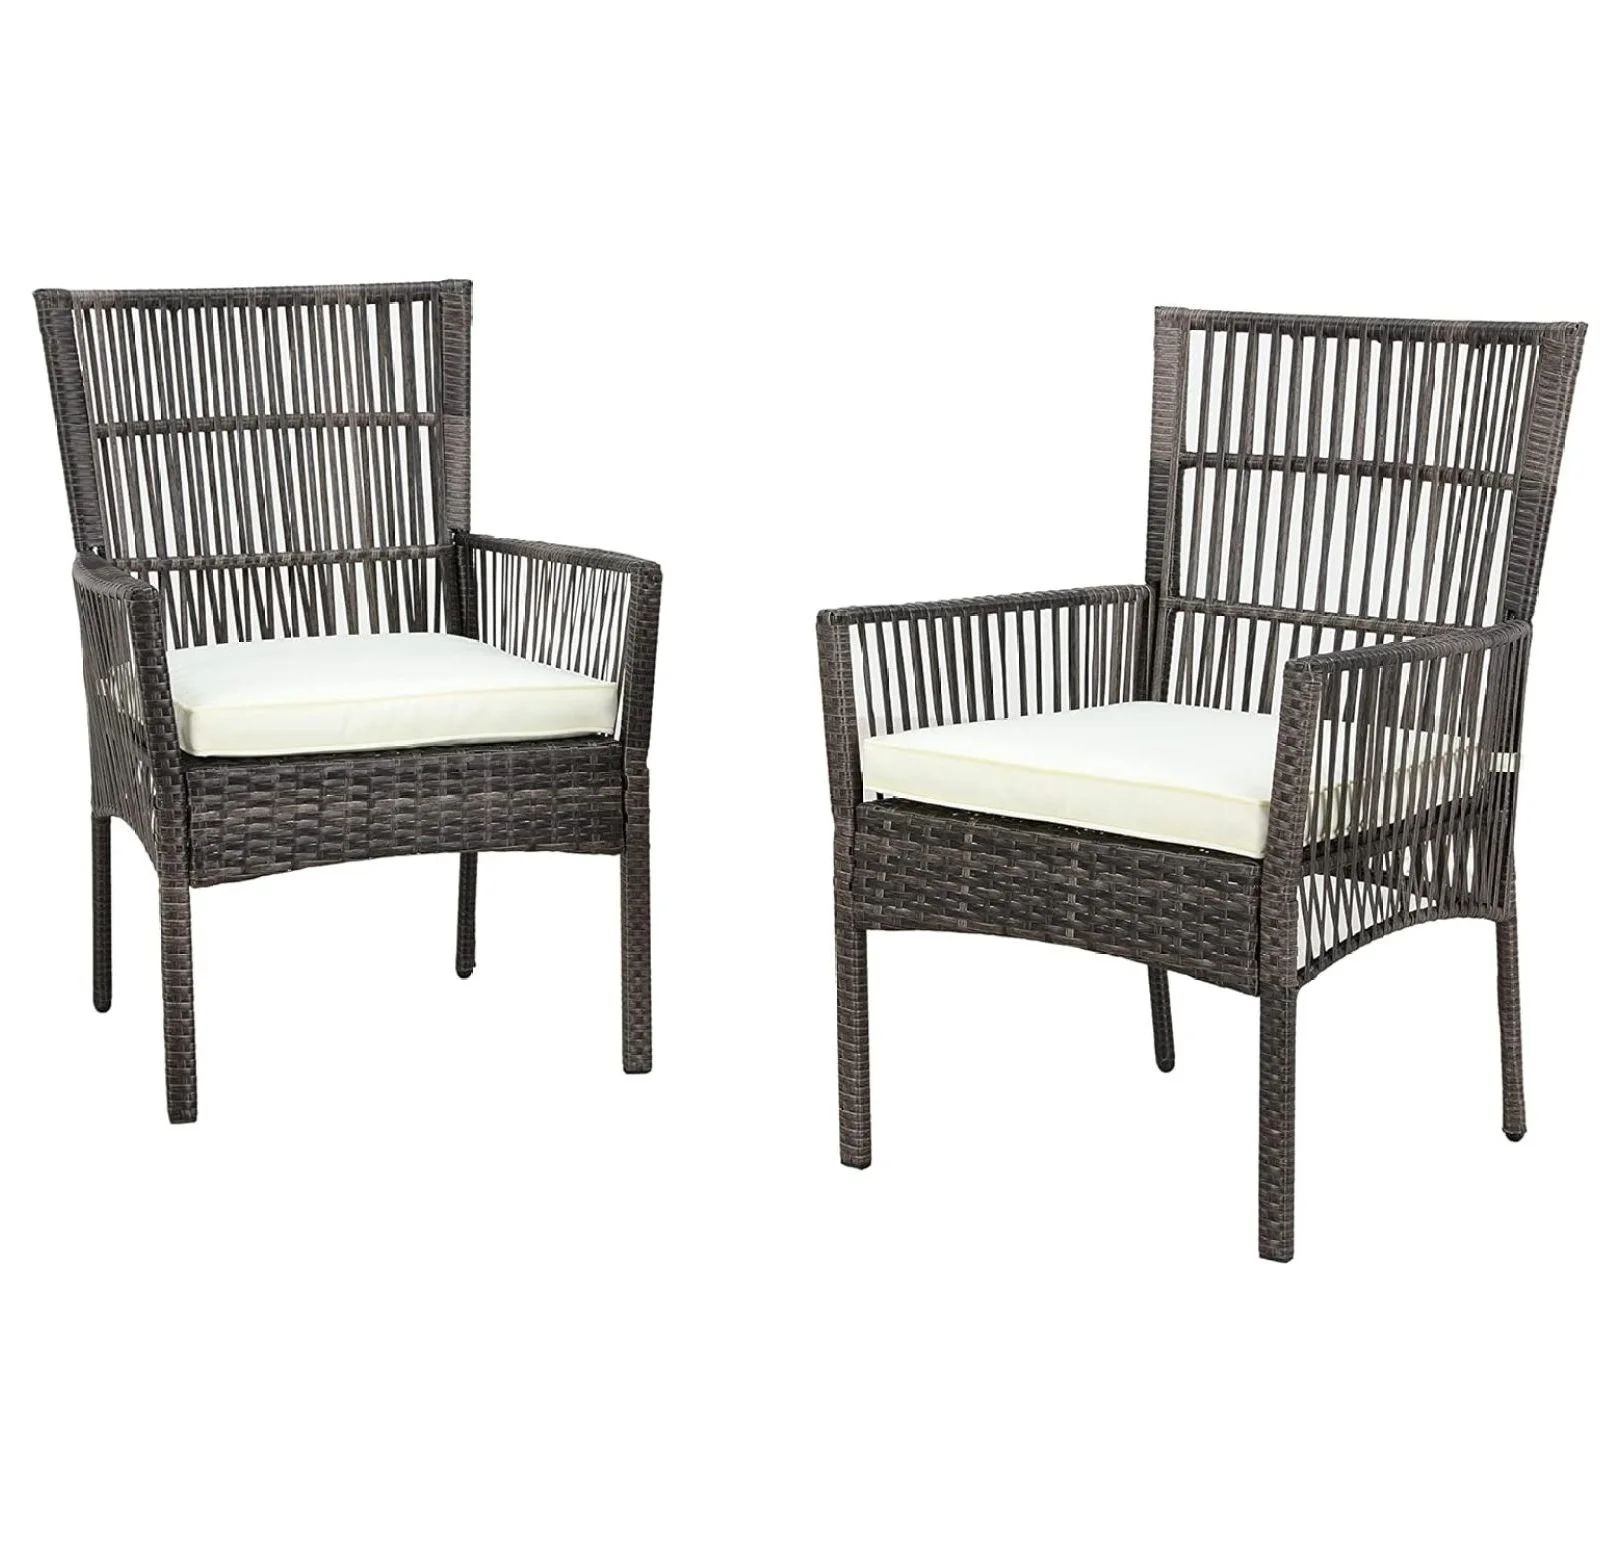 Jaxnfuro 2 Pieces Outdoor Wicker Chair Metal Dining Armchairs with Cushion, Beige | Walmart (US)